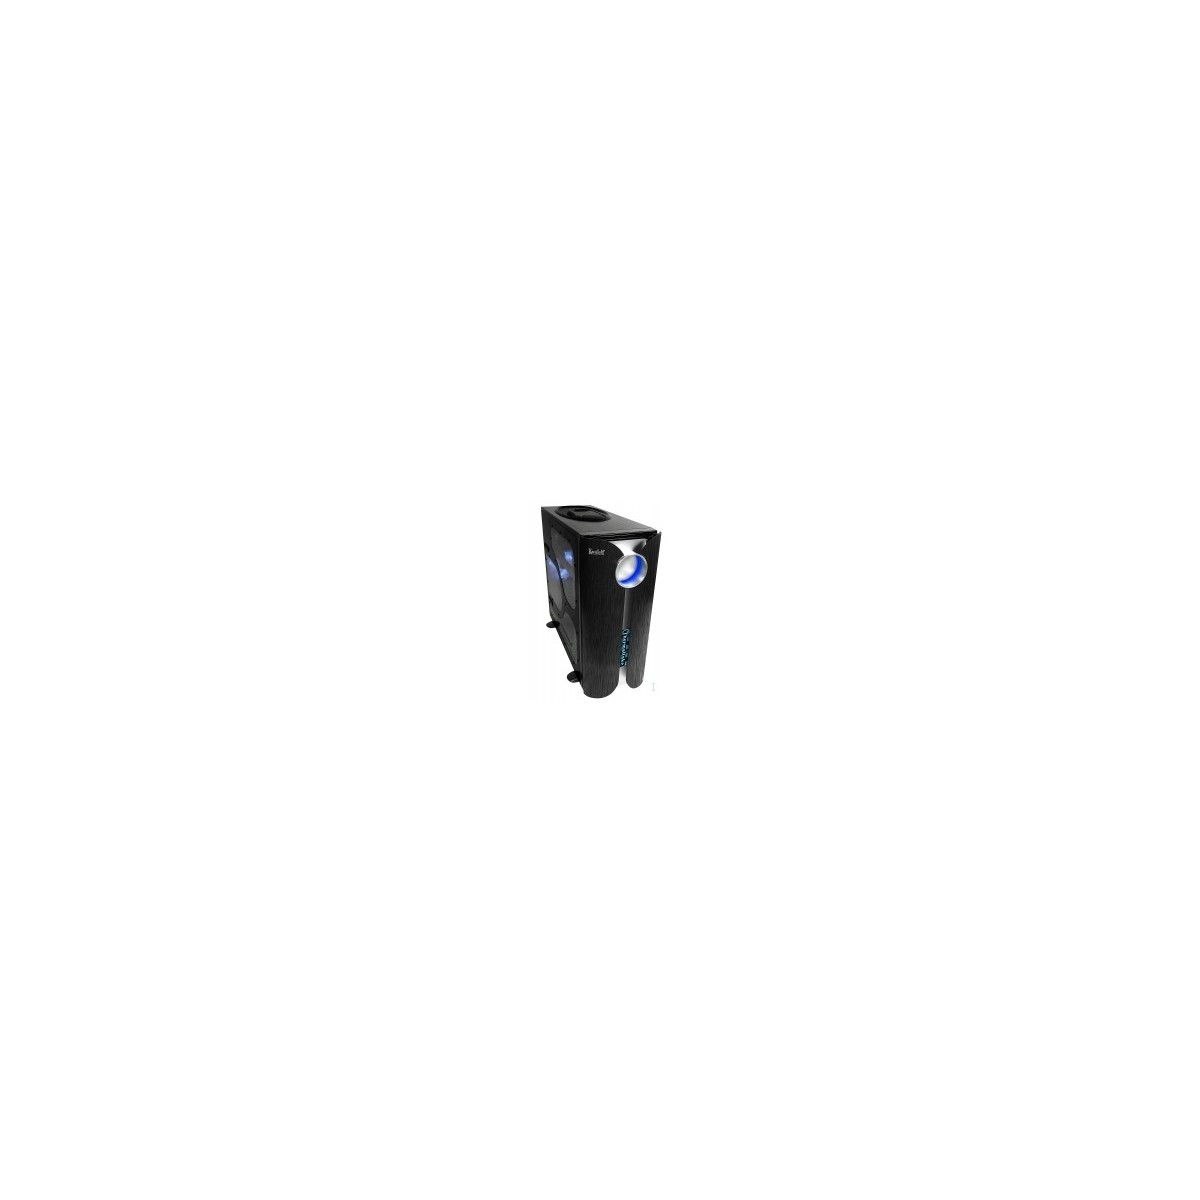 Thermaltake Xaser KANDALF VA9000BWS - Mini tower ATX 3.5  - Power Supply Cooler - USB 3.0